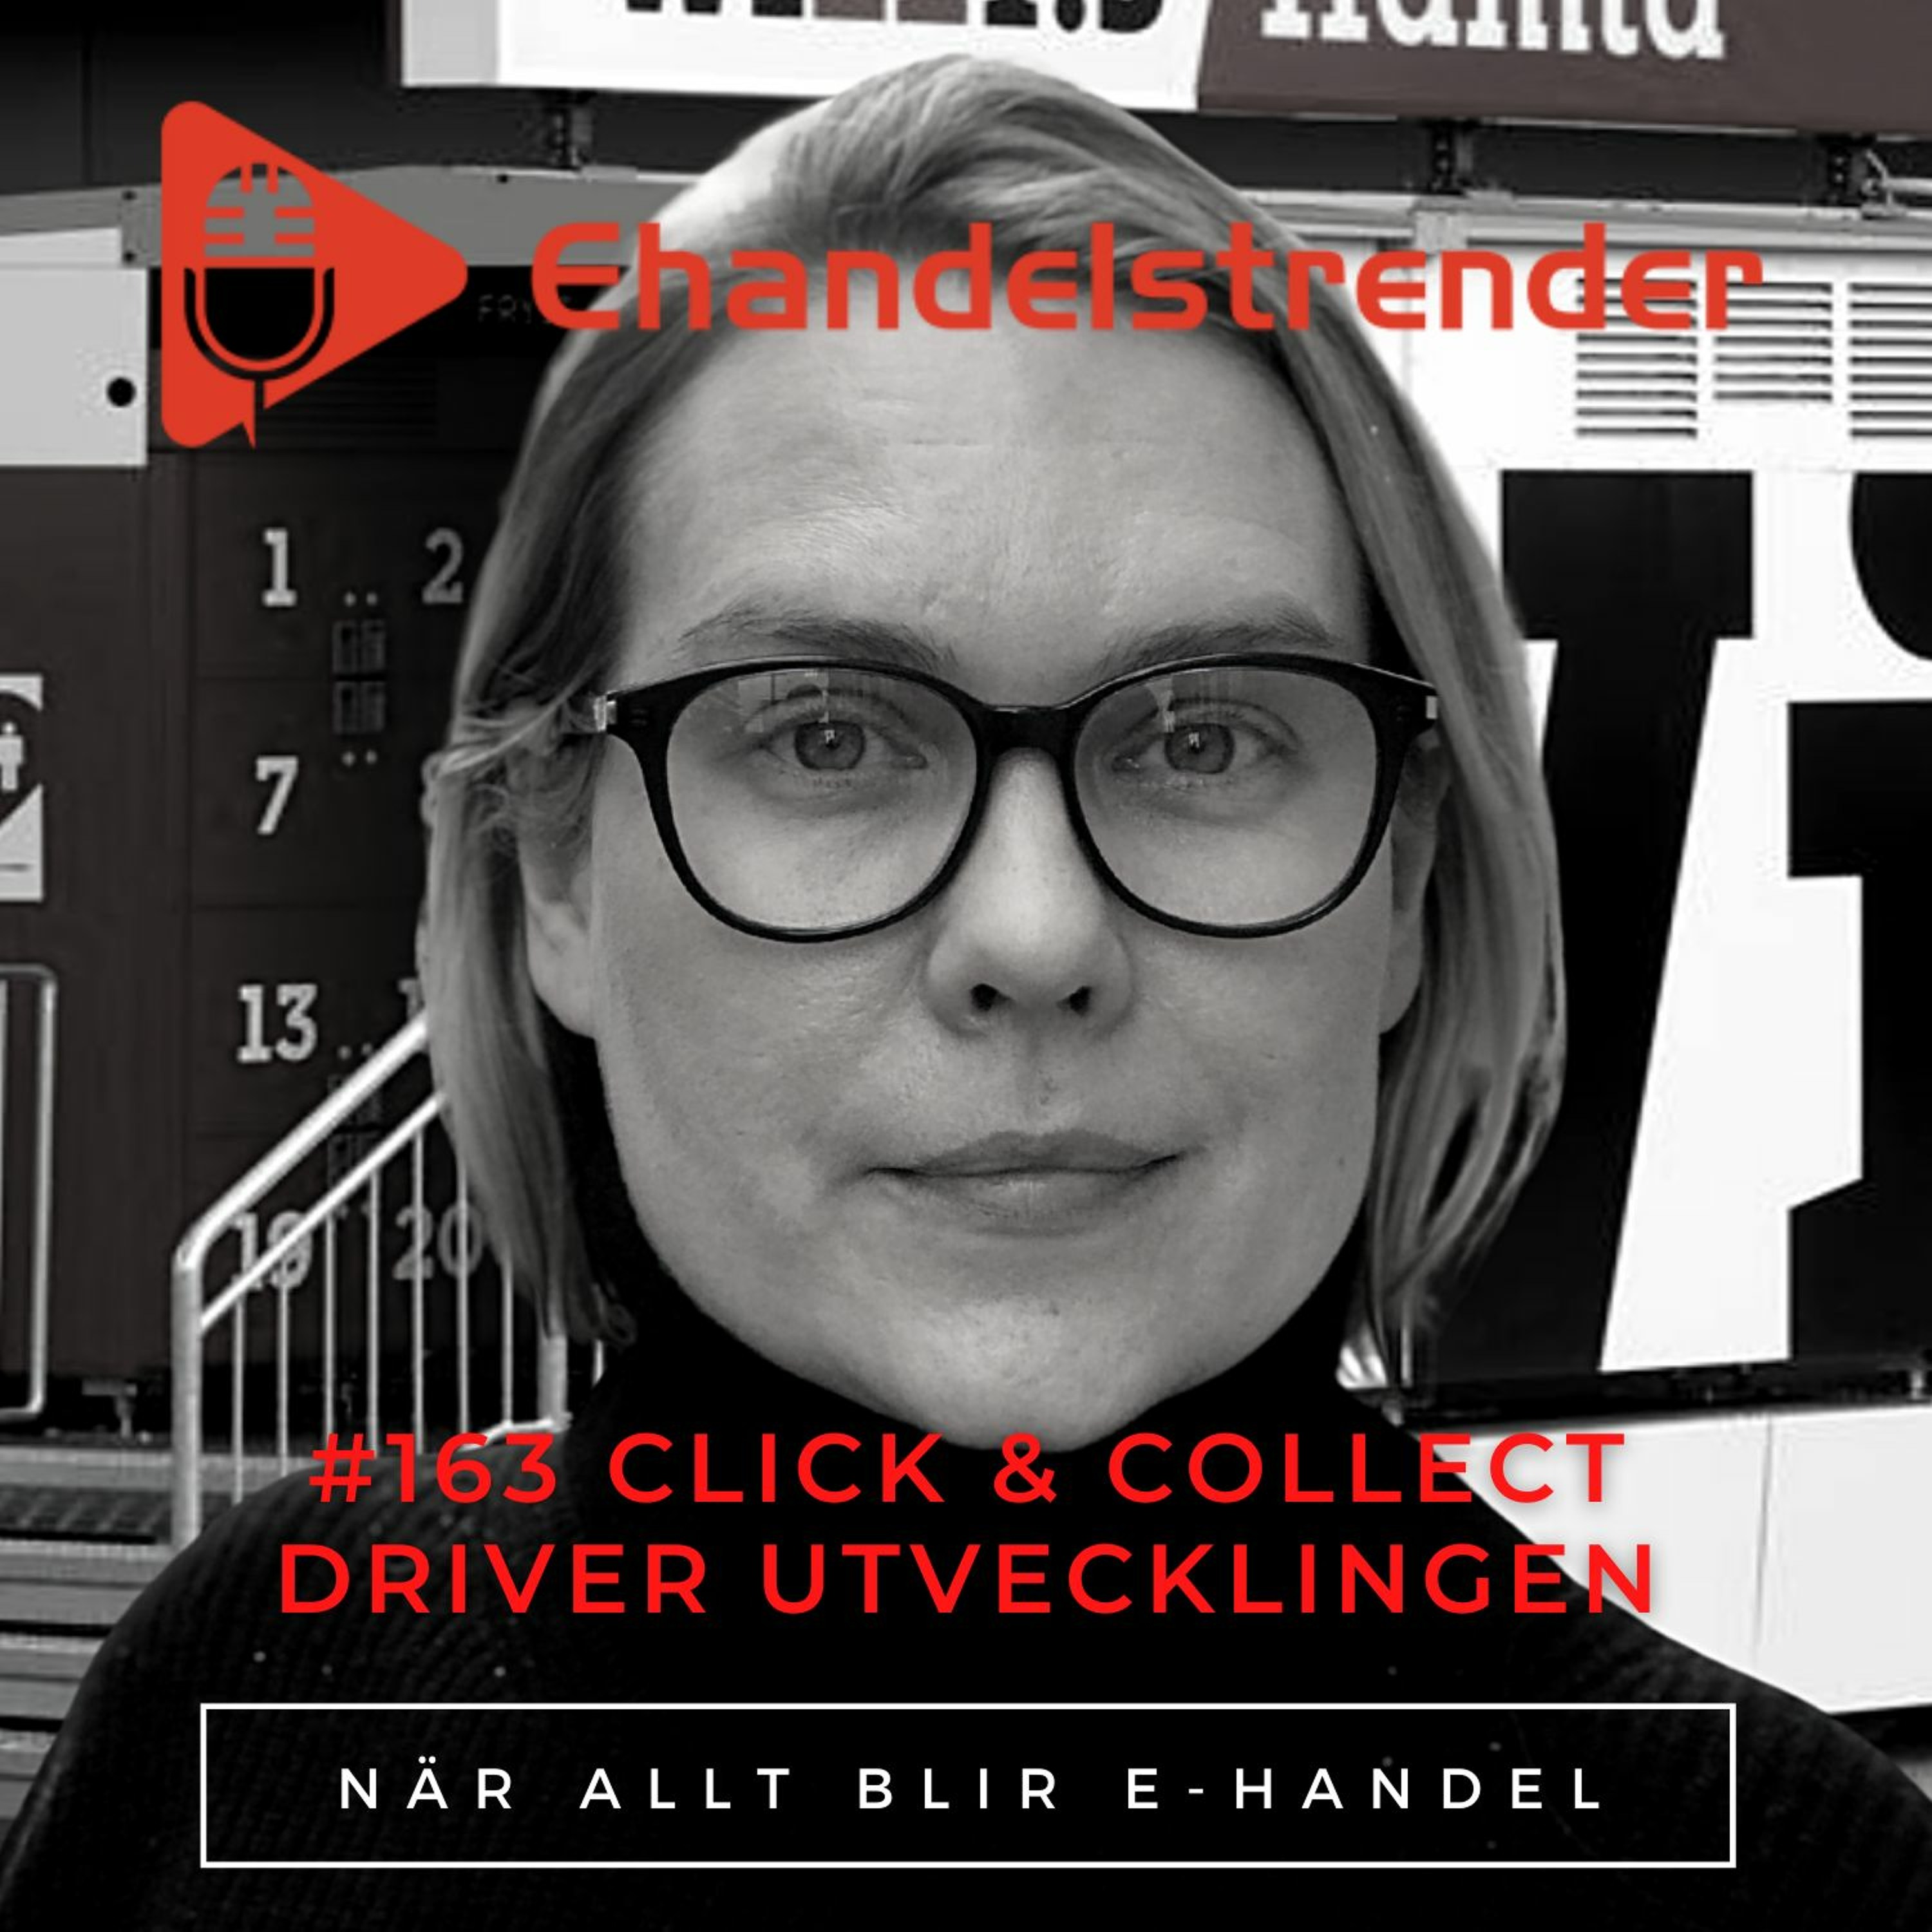 163. Click & collect driver Axfoods hypertillväxt på nätet –  Ehandelstrender – Podcast – Podtail